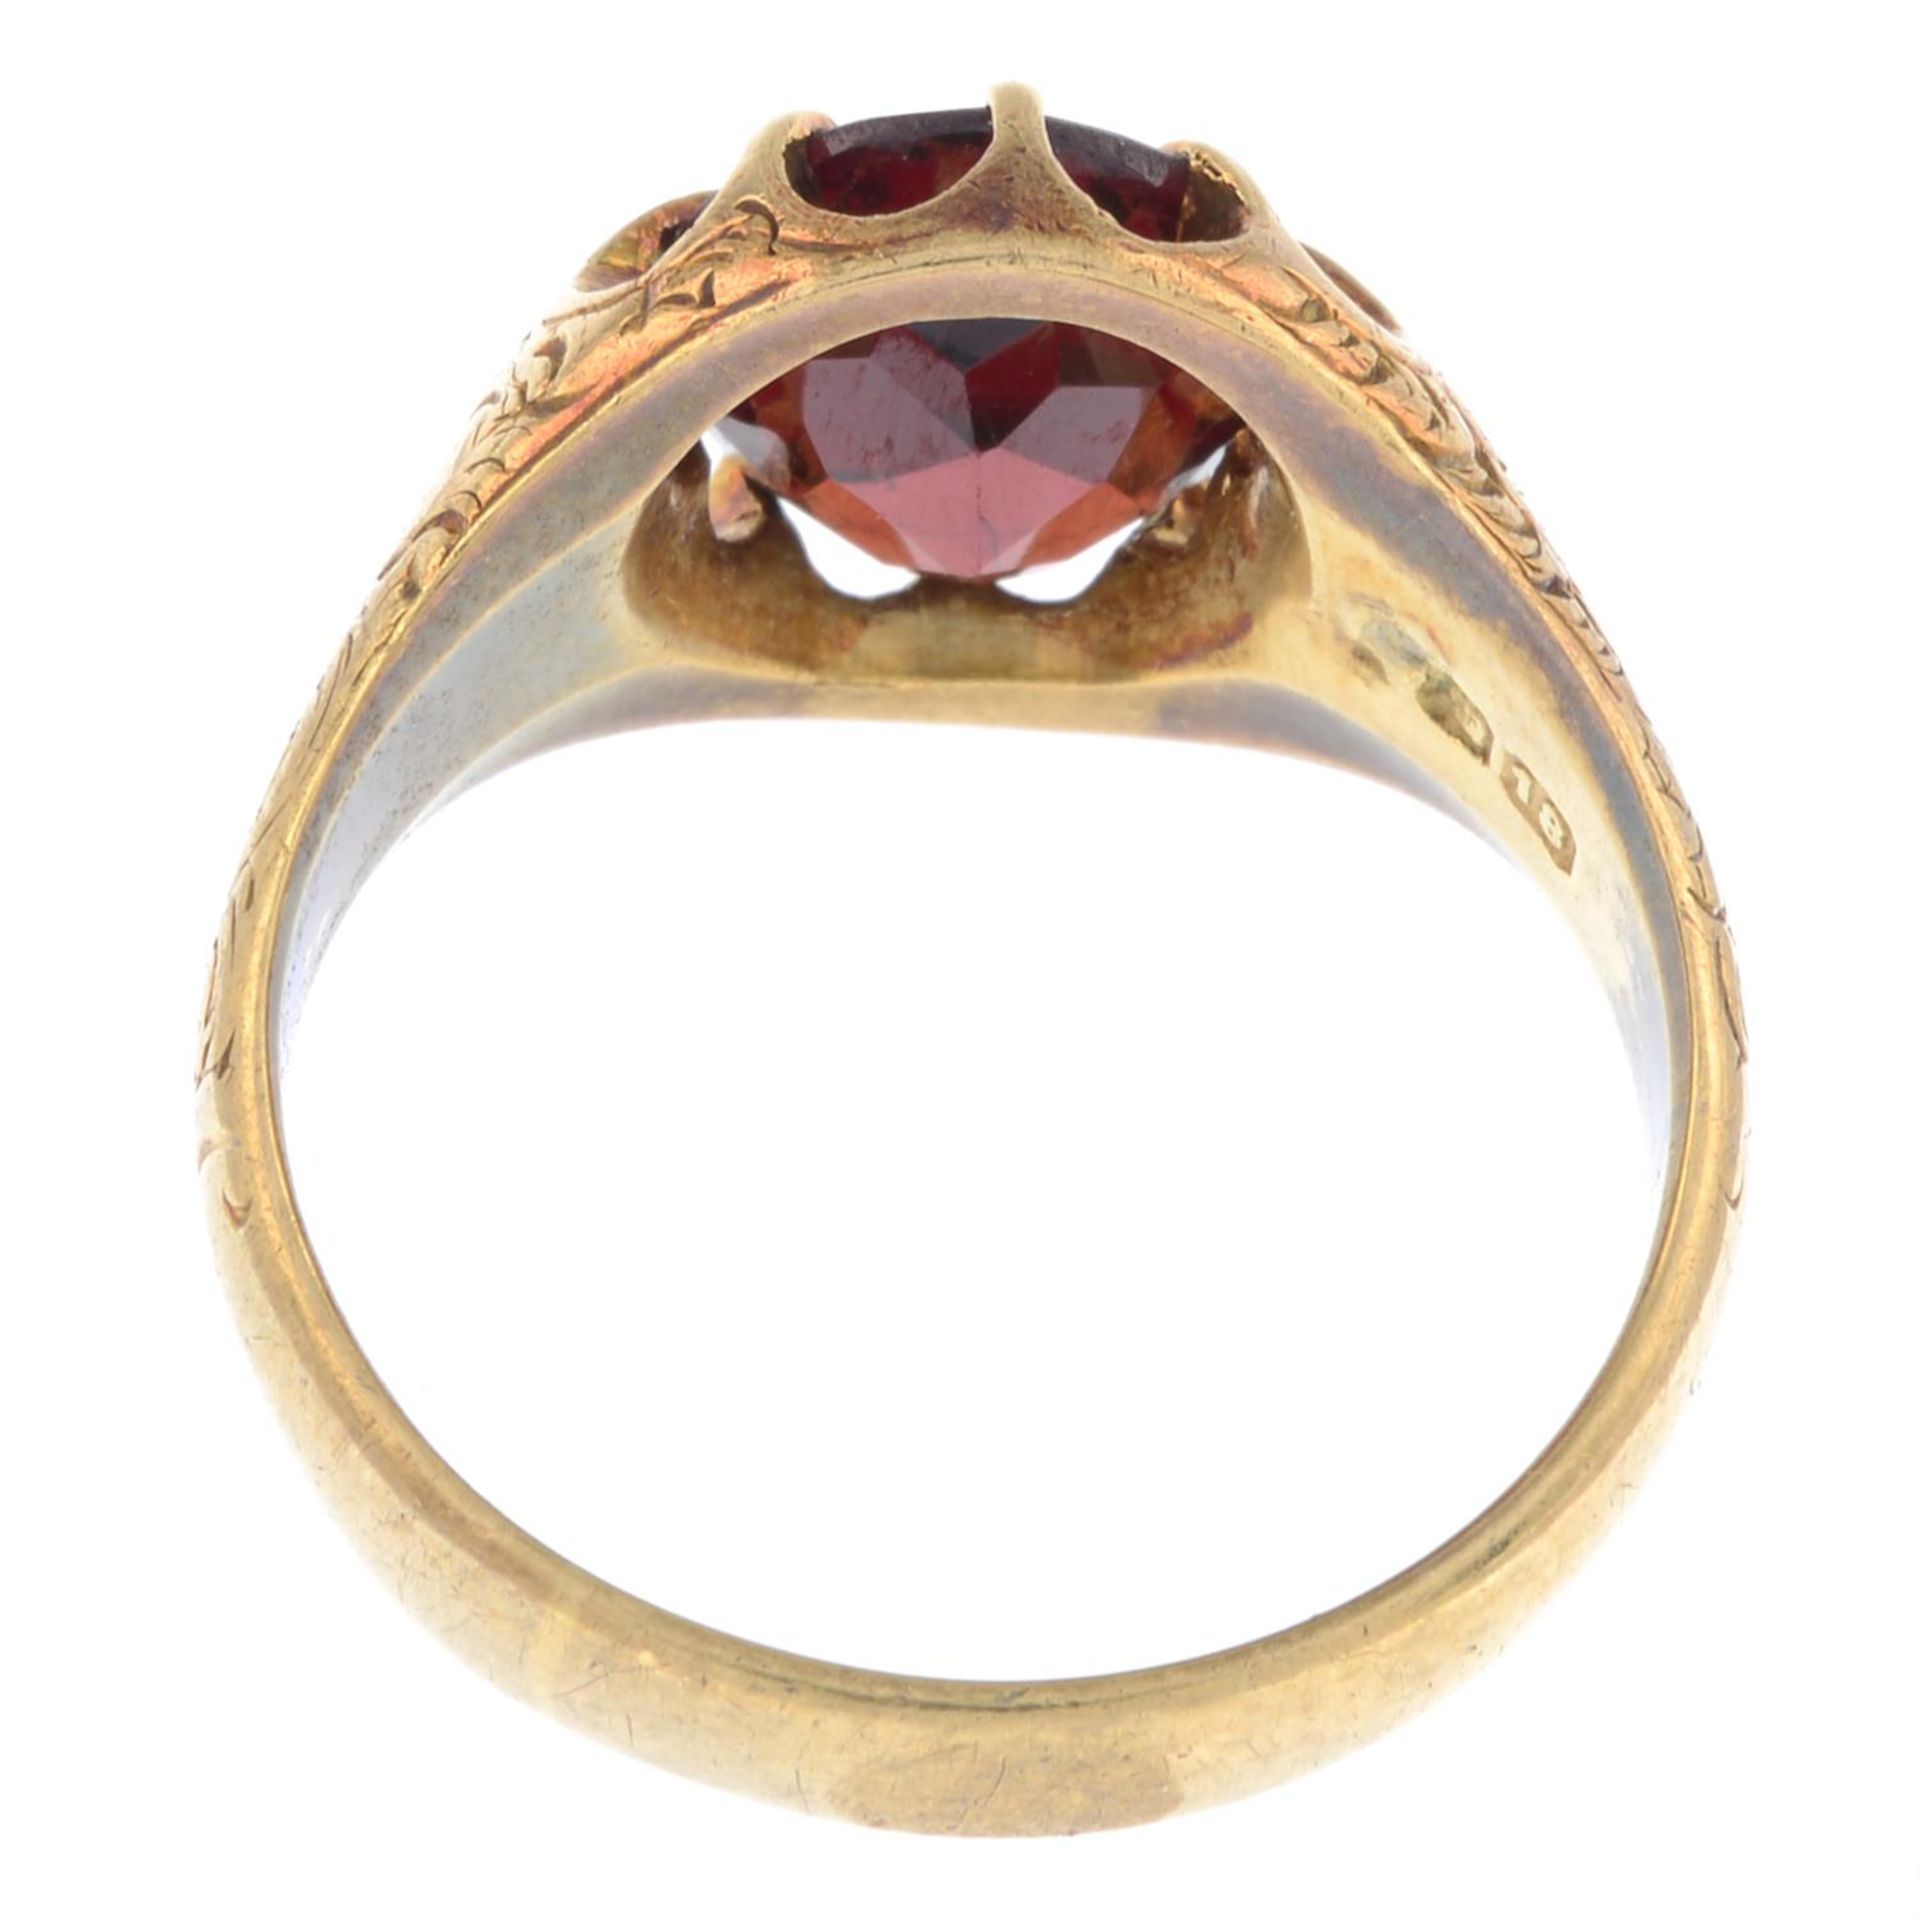 Edwardian 18ct gold garnet single-stone ring - Image 2 of 2